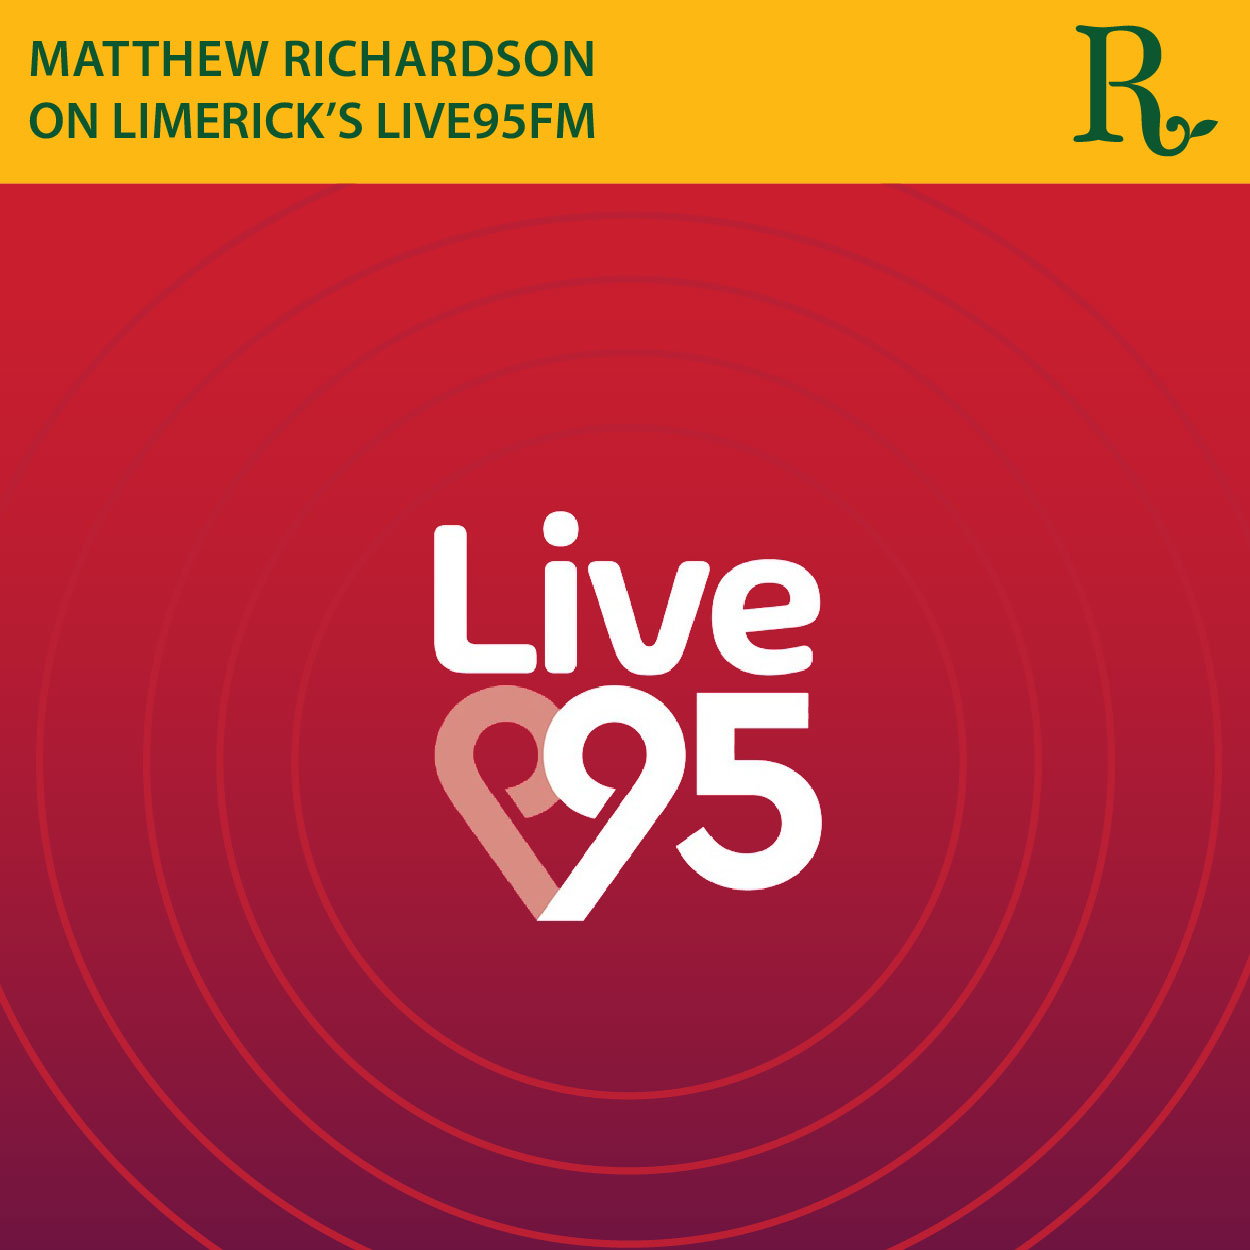 Matthew Richardson on air with Live 95fm